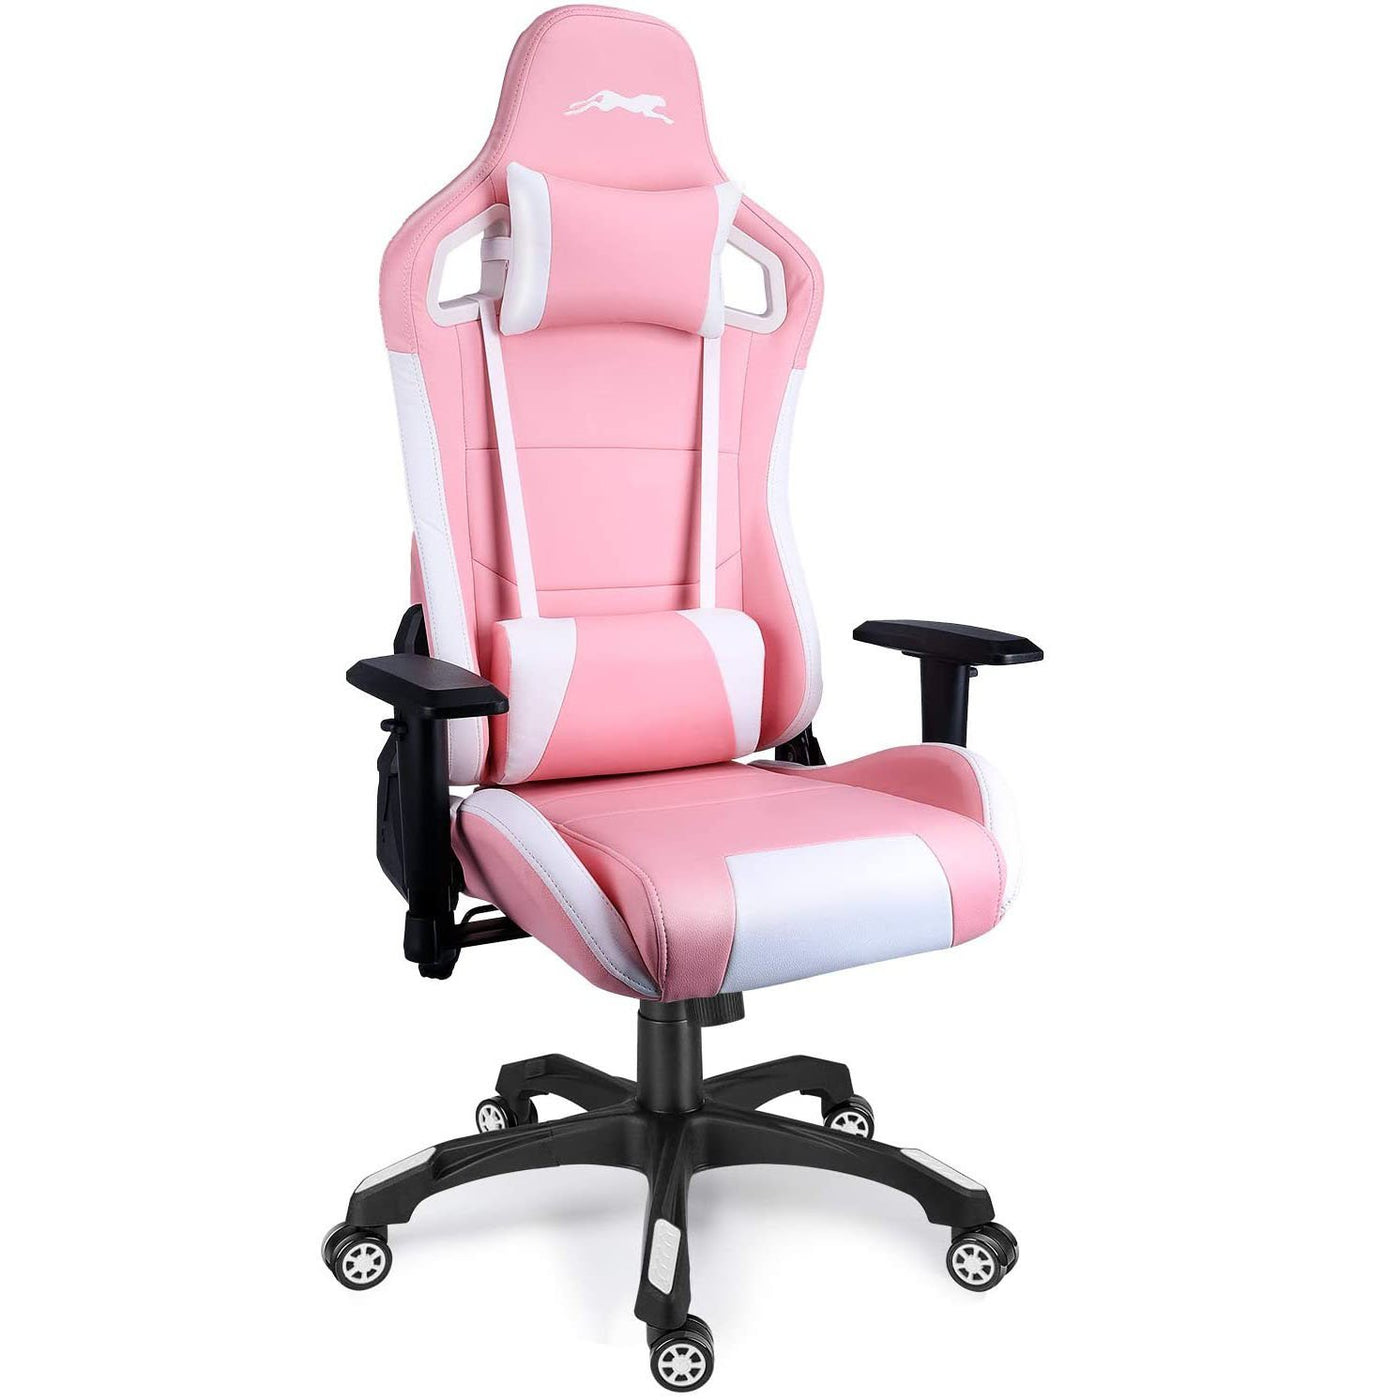 Swivel Gaming Chair with Adjustable Armrest Pink - HOMEKOKO